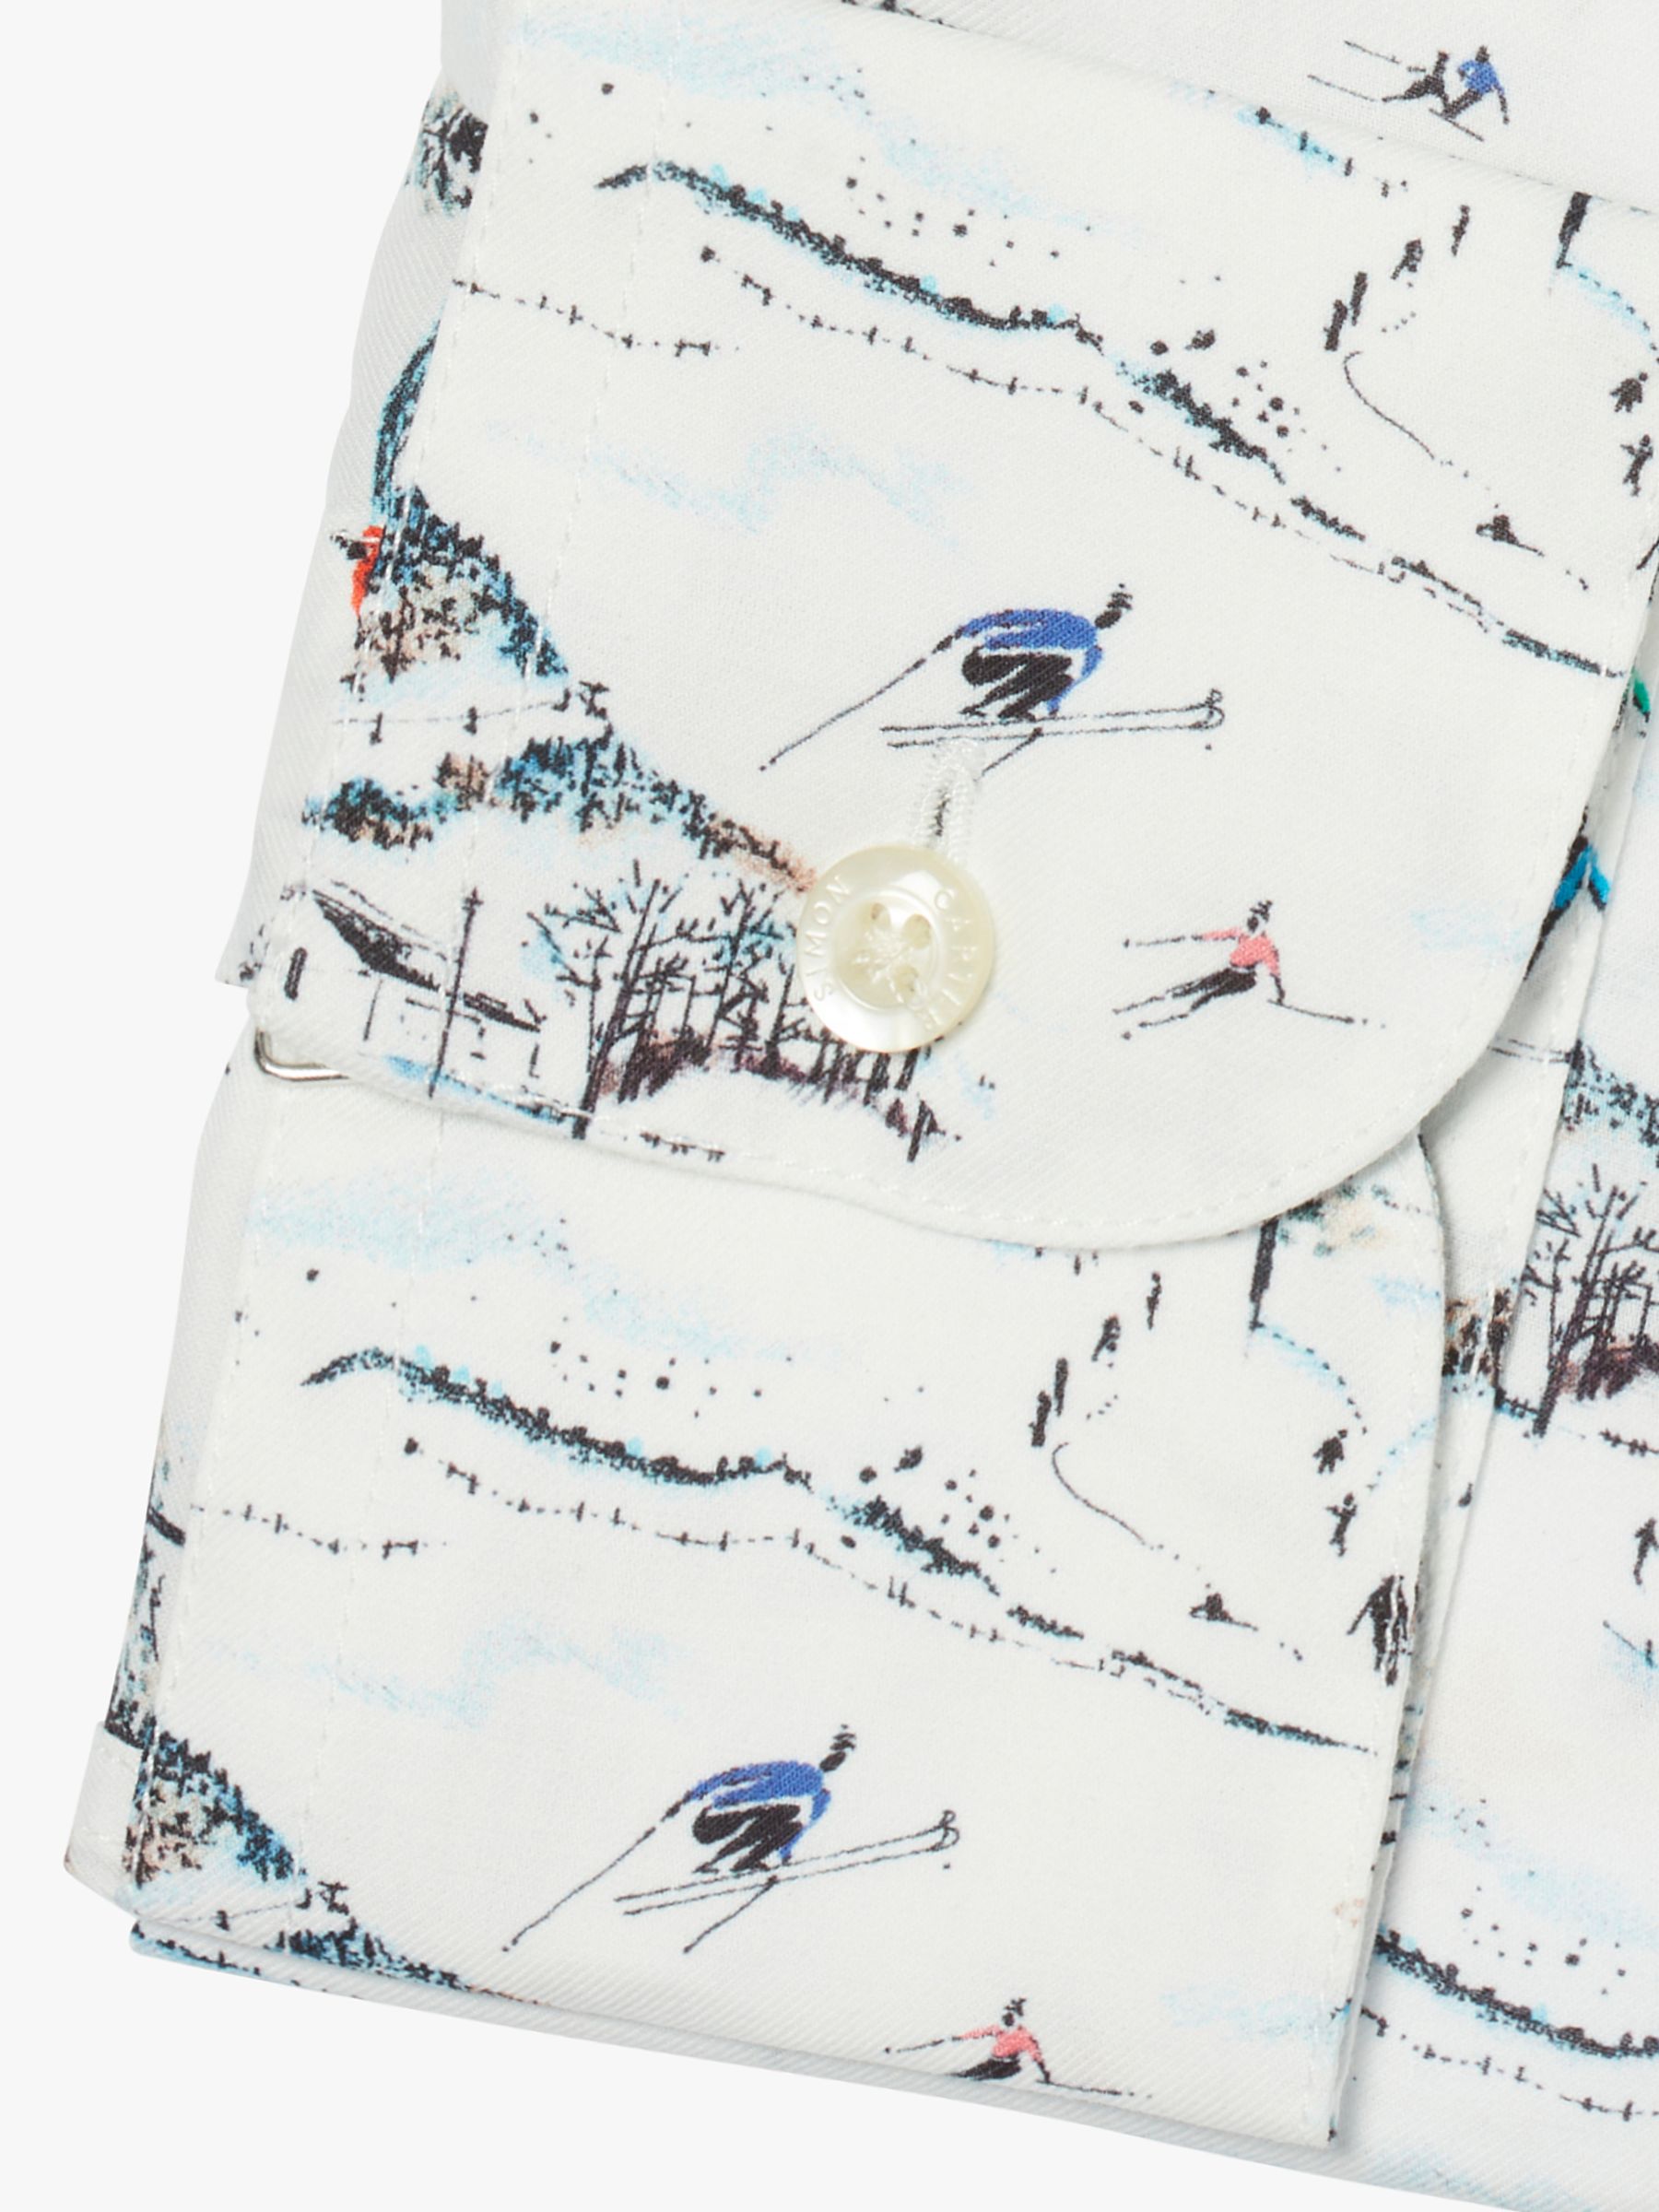 Simon Carter Skiing Print Long Sleeve Shirt, White/Multi, 17.5